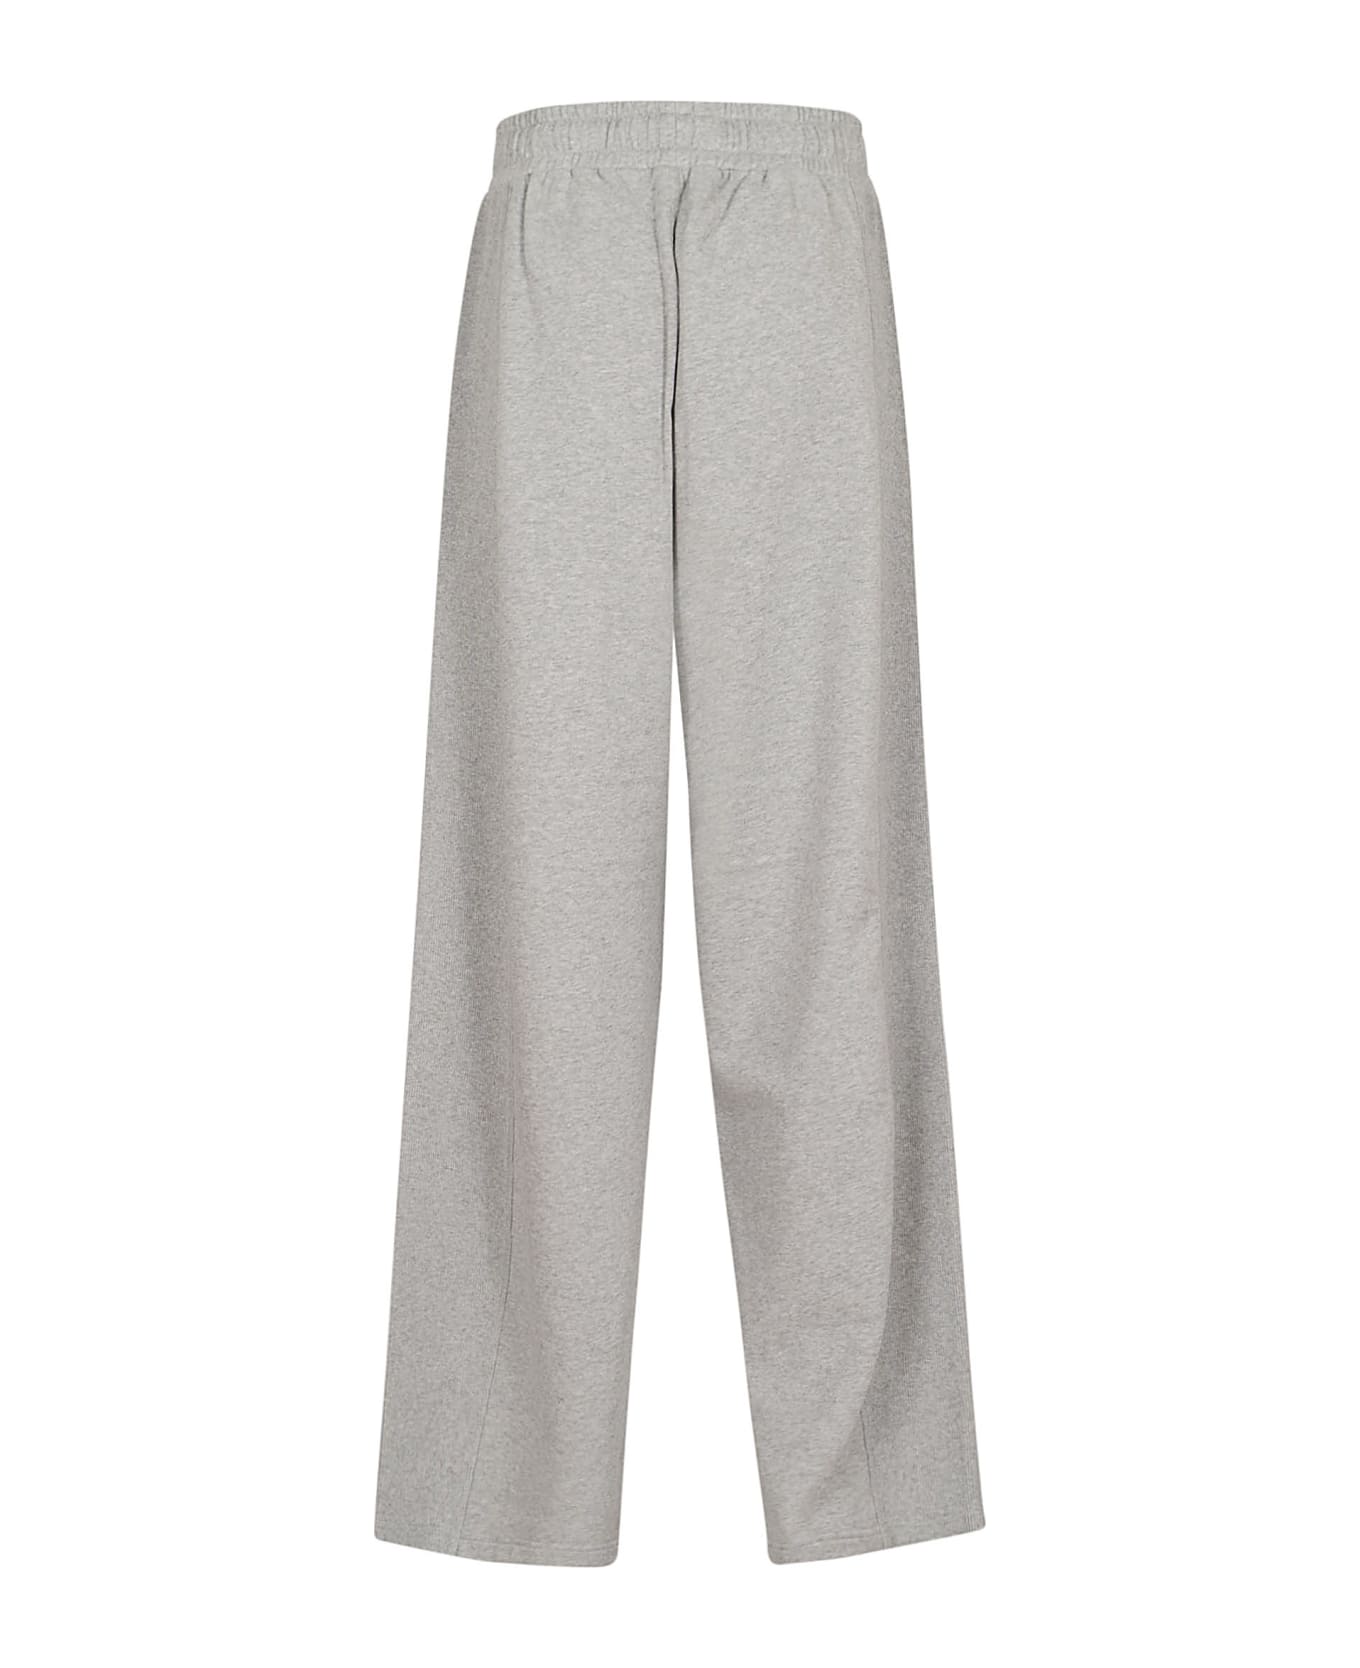 Stella McCartney Logo Patch Trousers - Light Grey Melange ボトムス